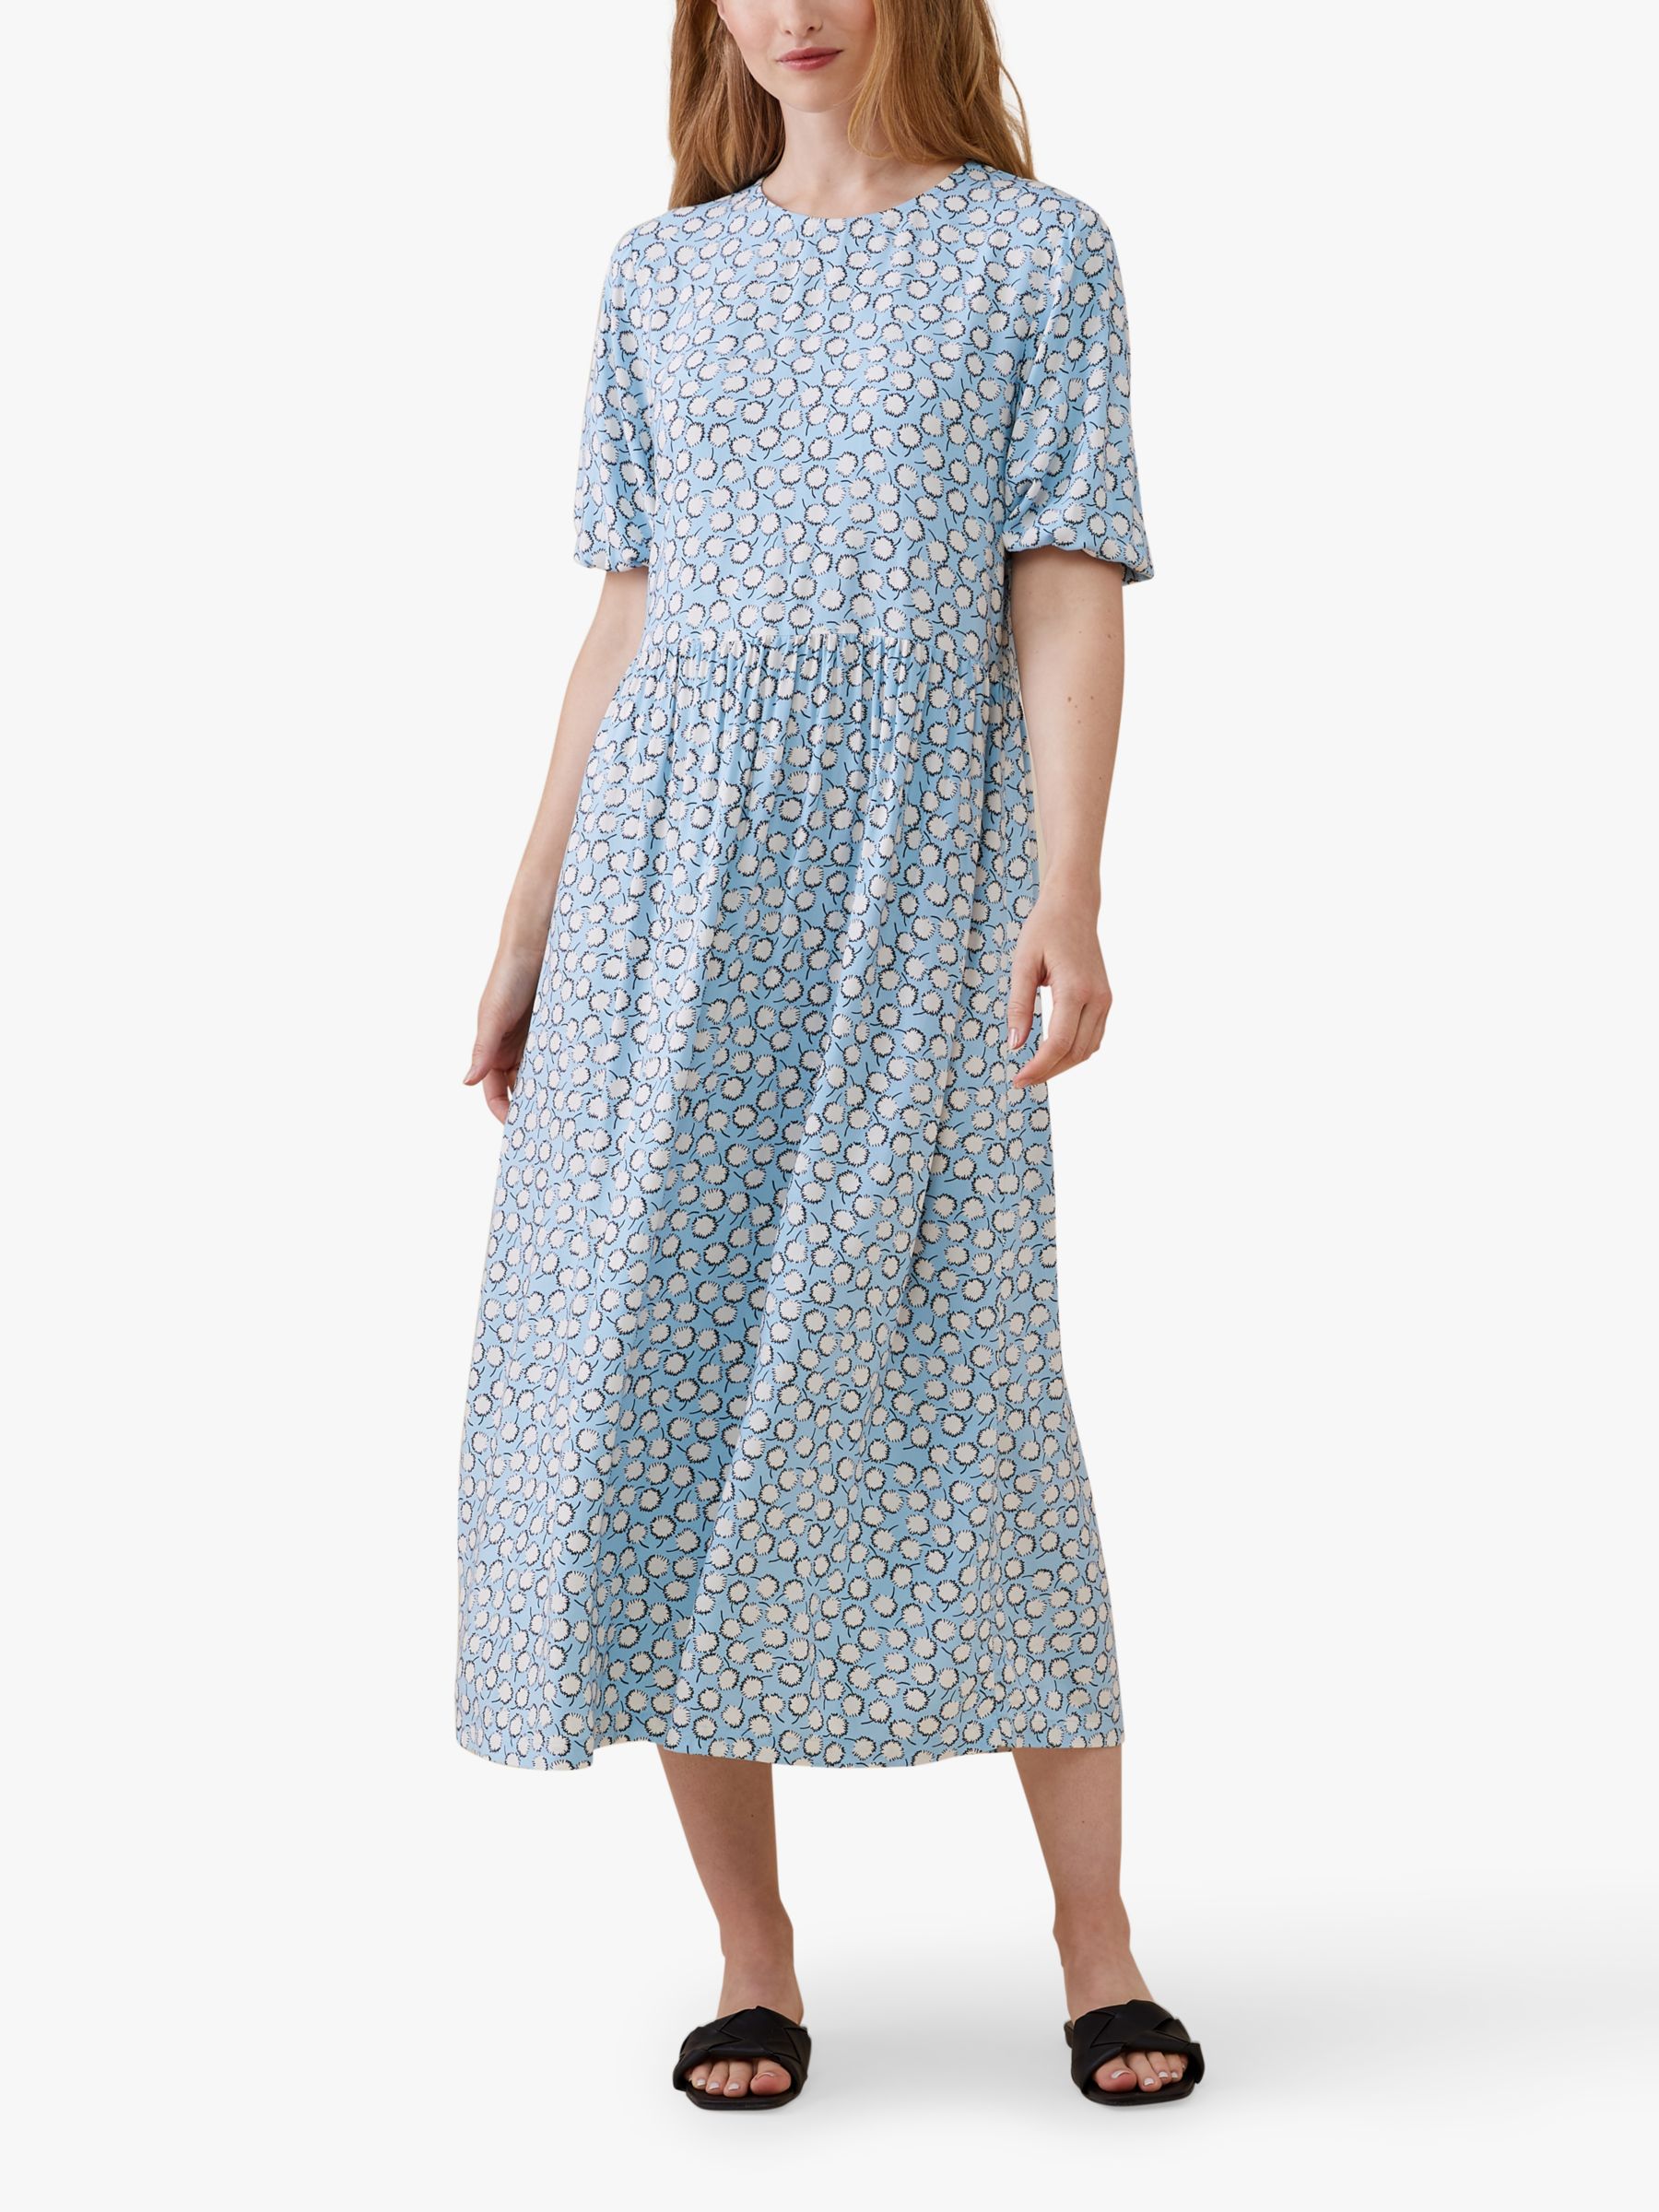 Finery Florence Ditsy Floral Print Midi Dress, Blue/Multi, 8